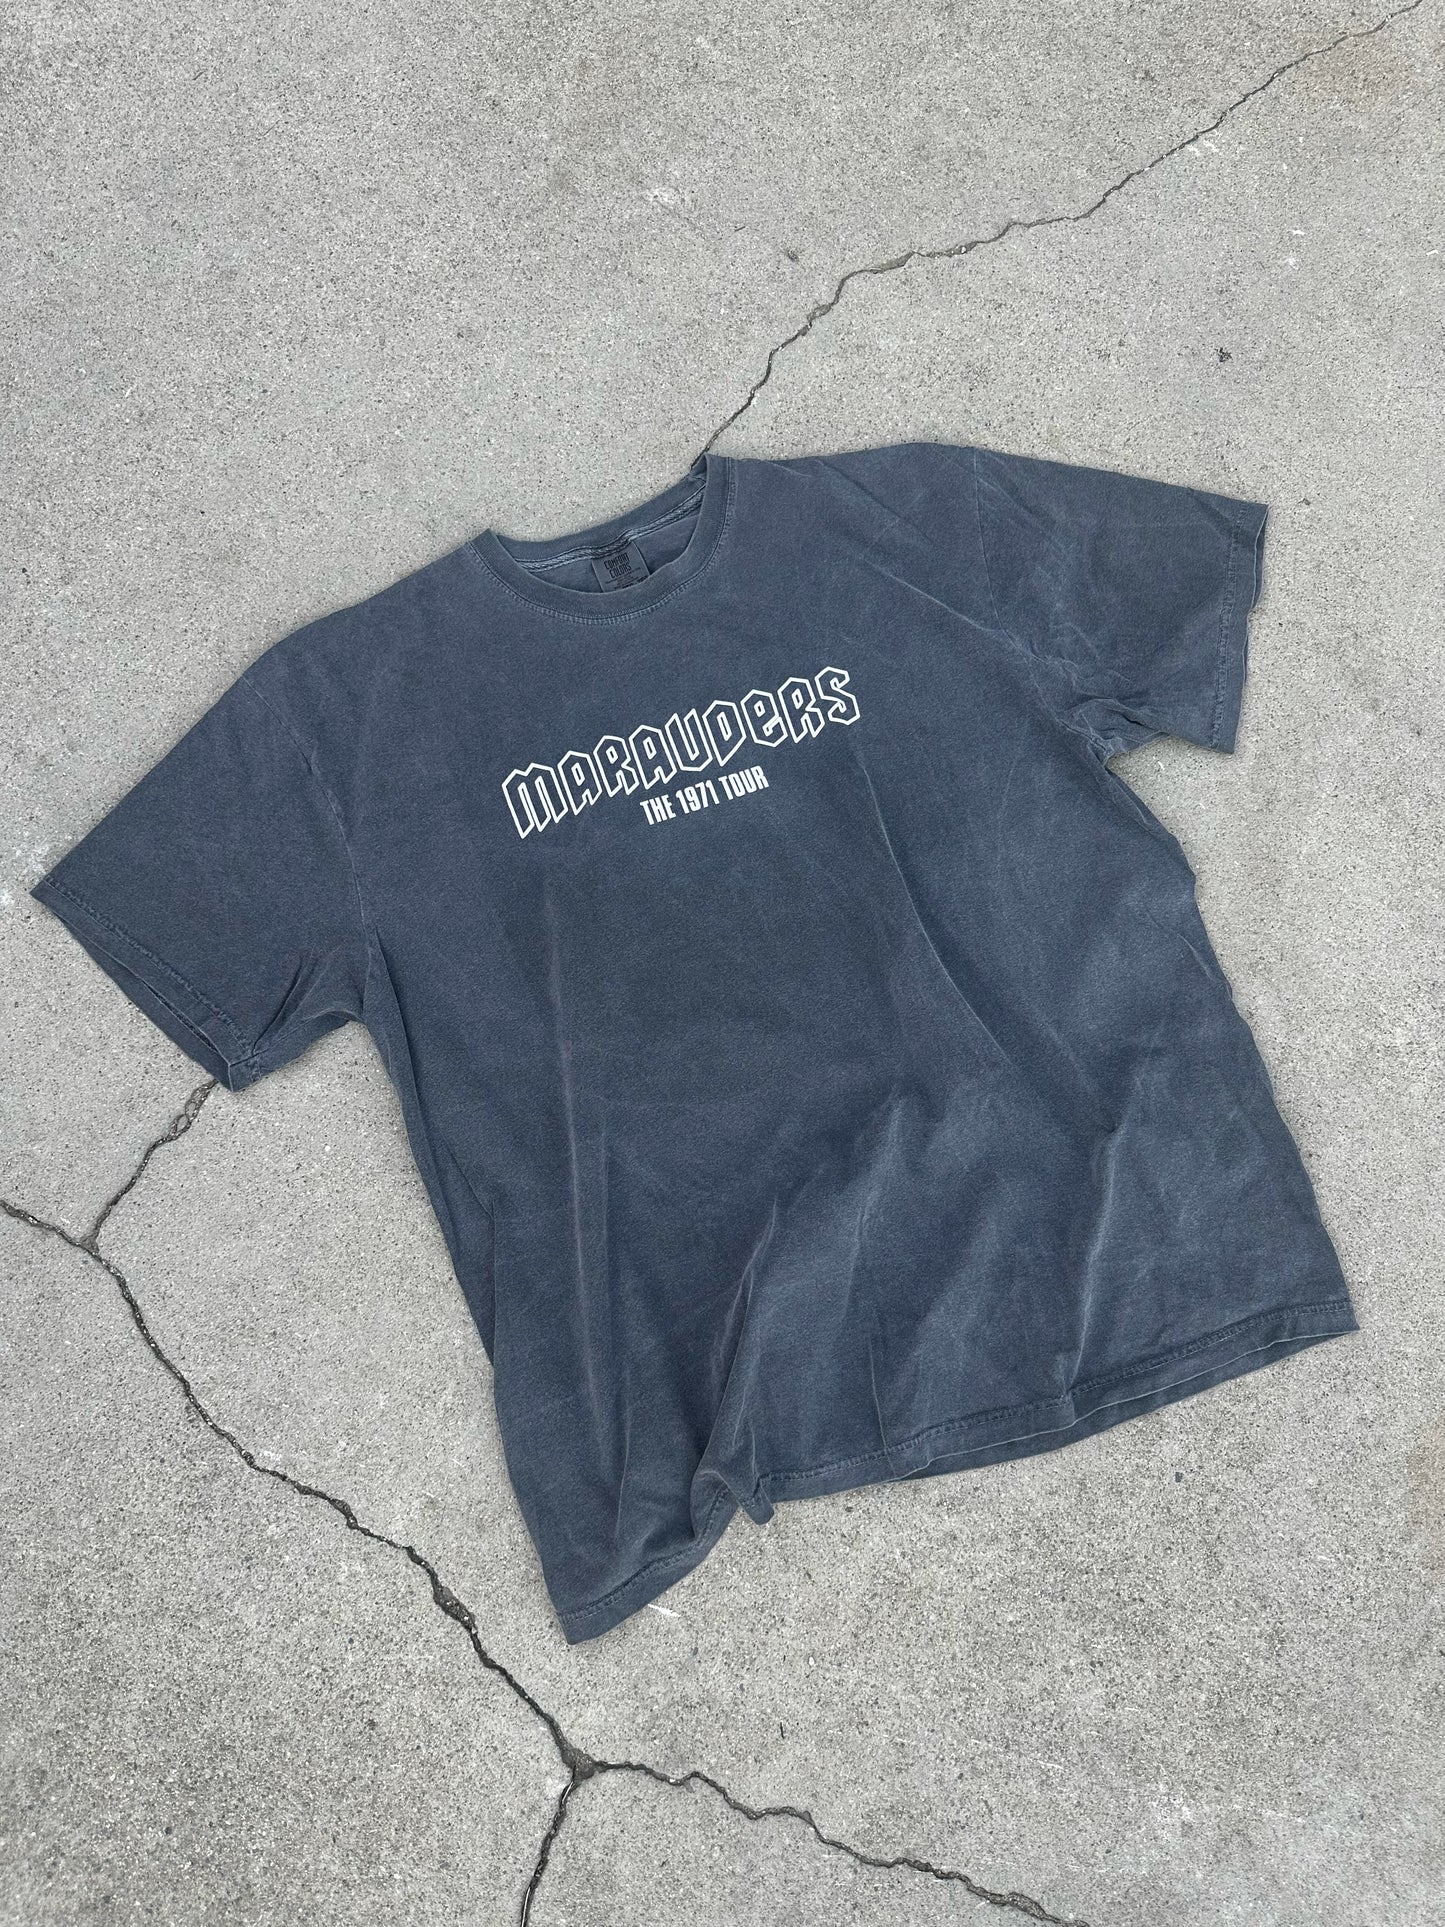 The Marauders 1971 Tour T-Shirt